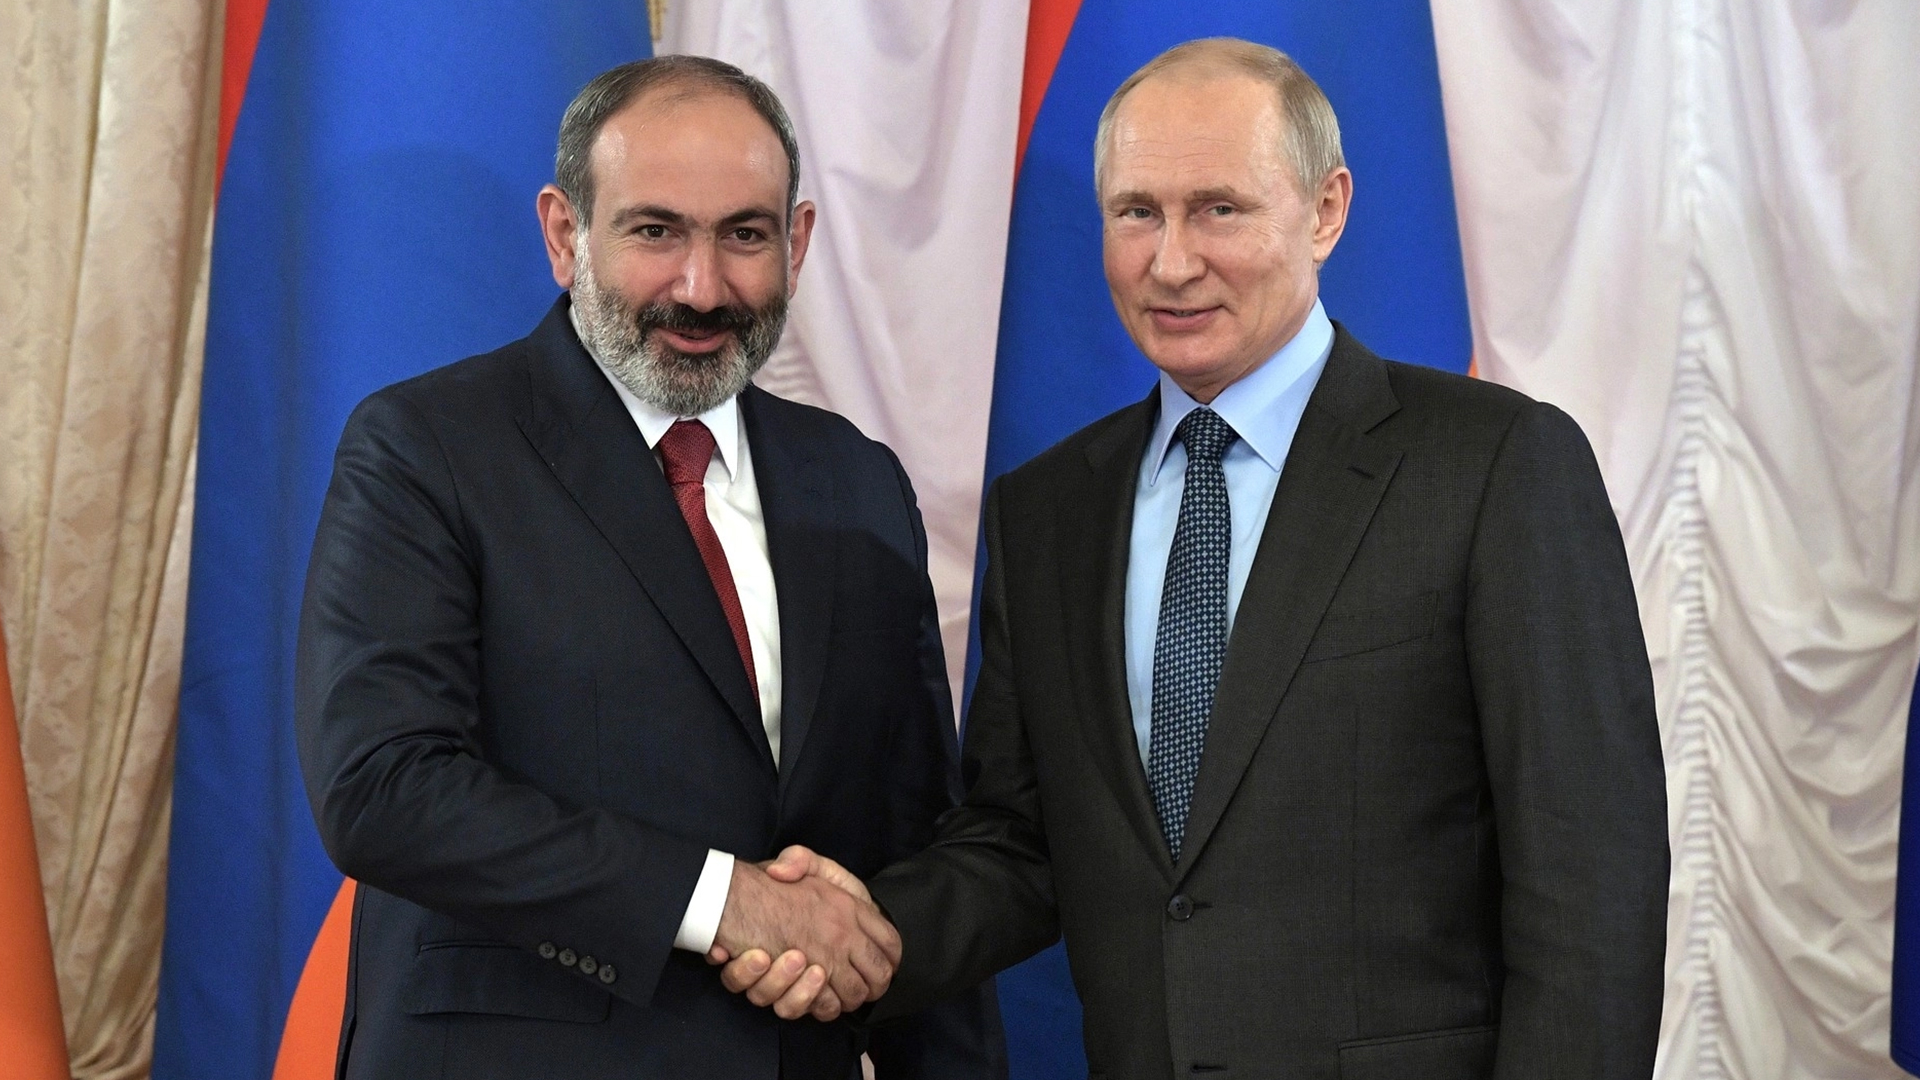 Putin speaks of Russia’s high-level alliance with Armenia